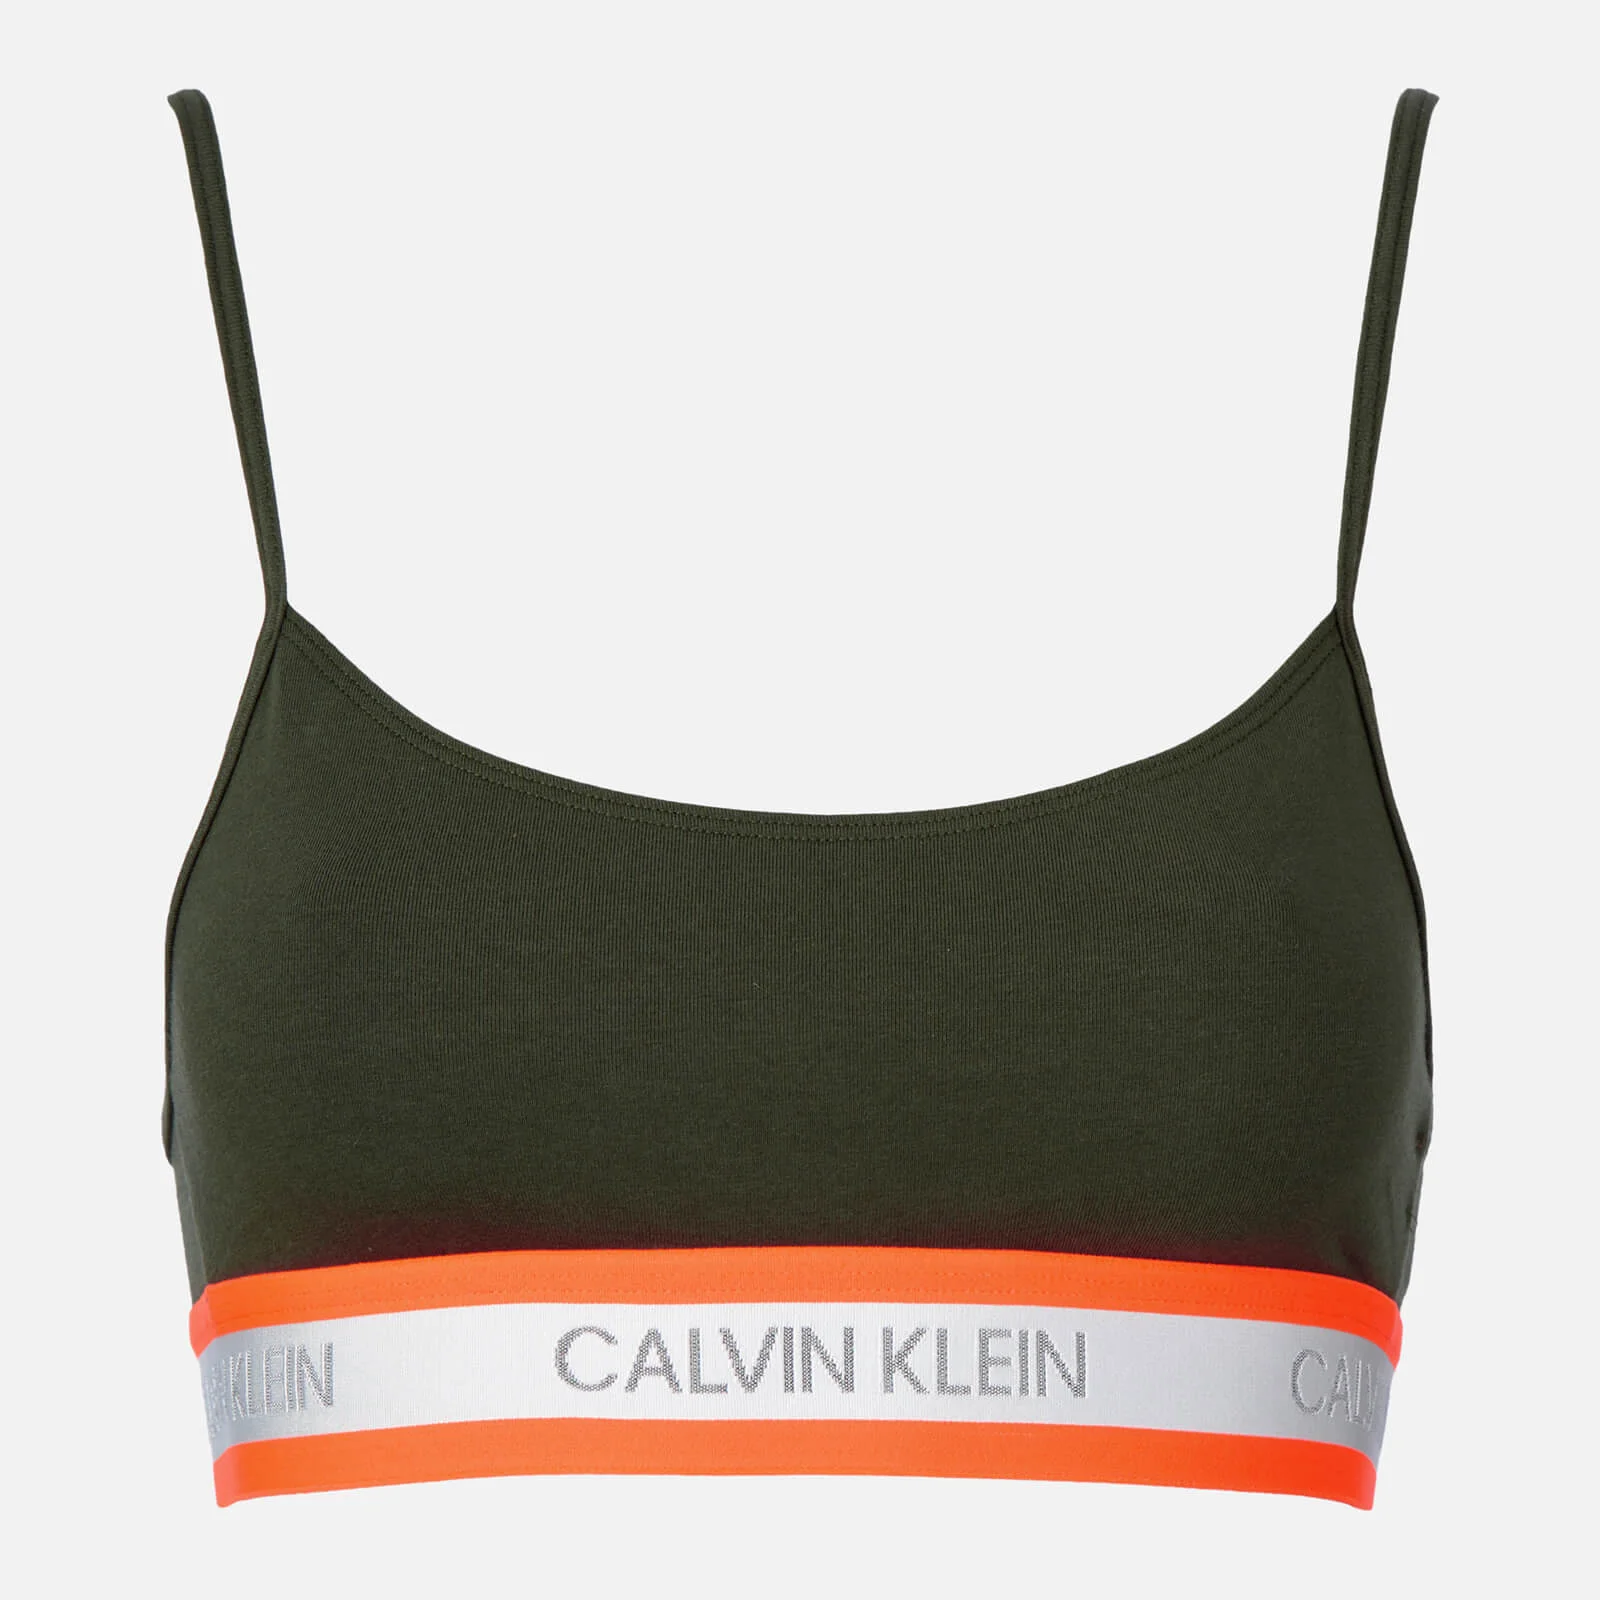 Calvin Klein Women's Neon Detail Unlined Bralette - Duffel Bag Image 1